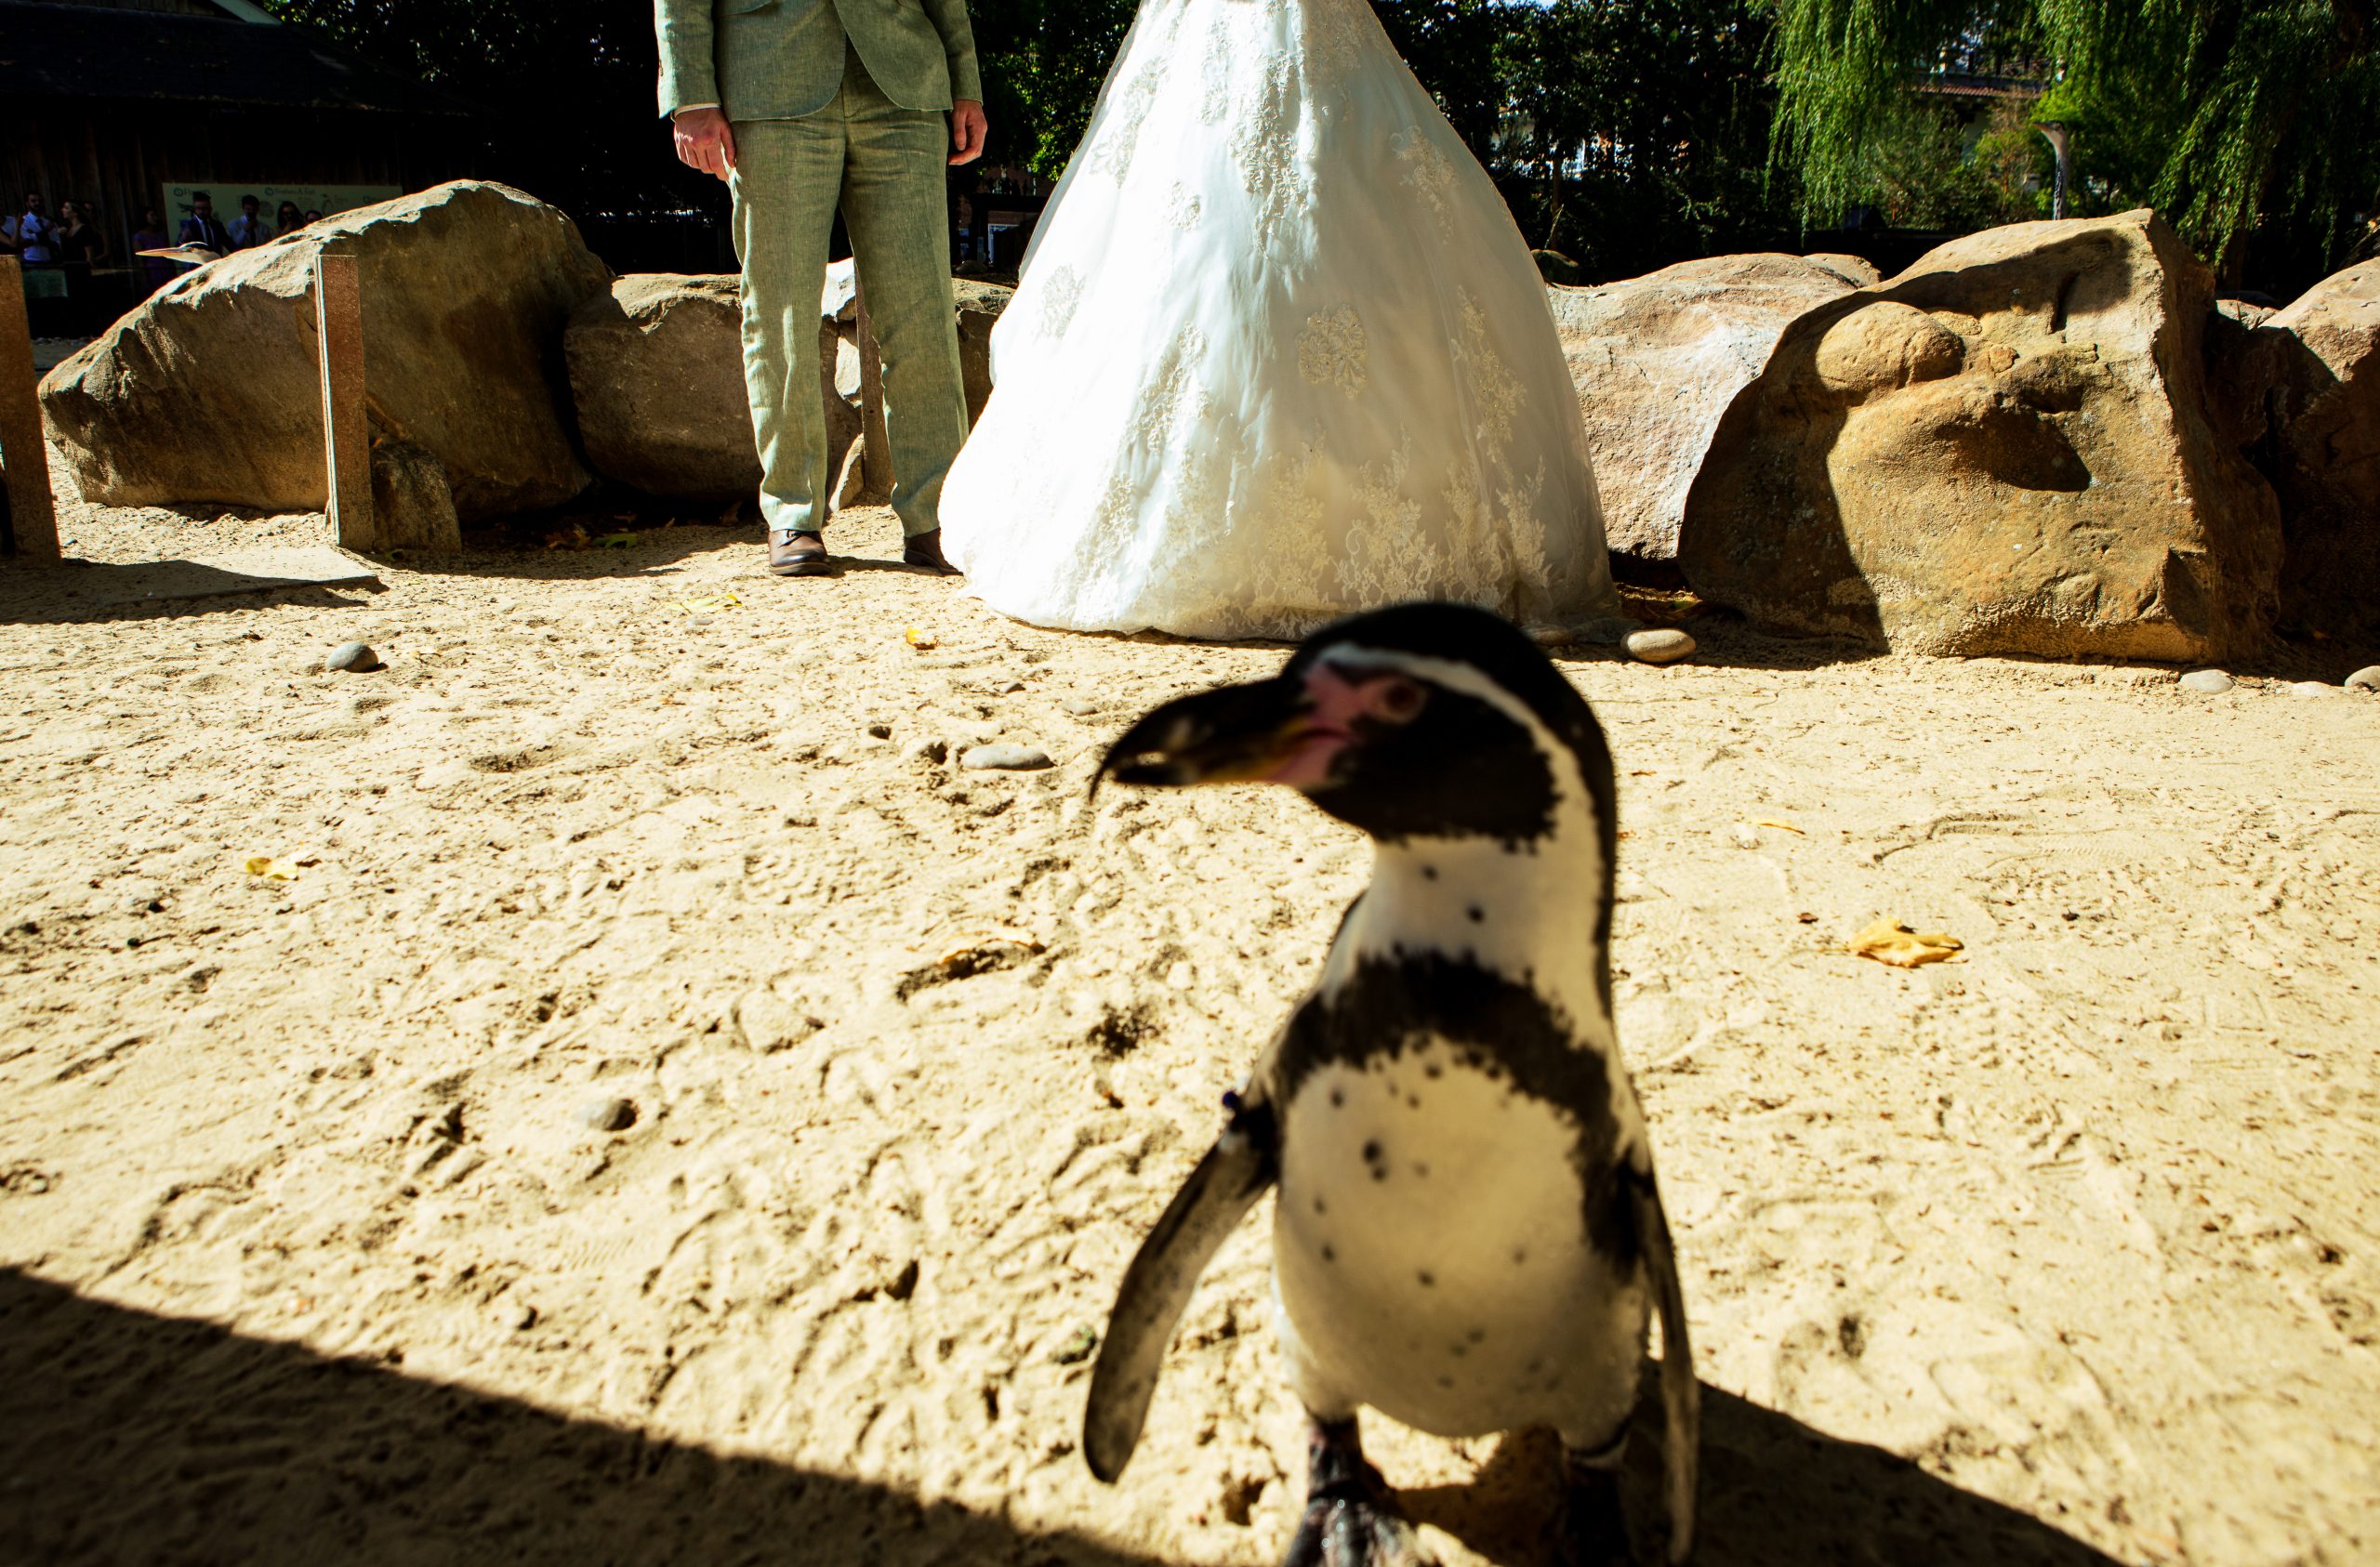 Penguin at ZSL London zoo